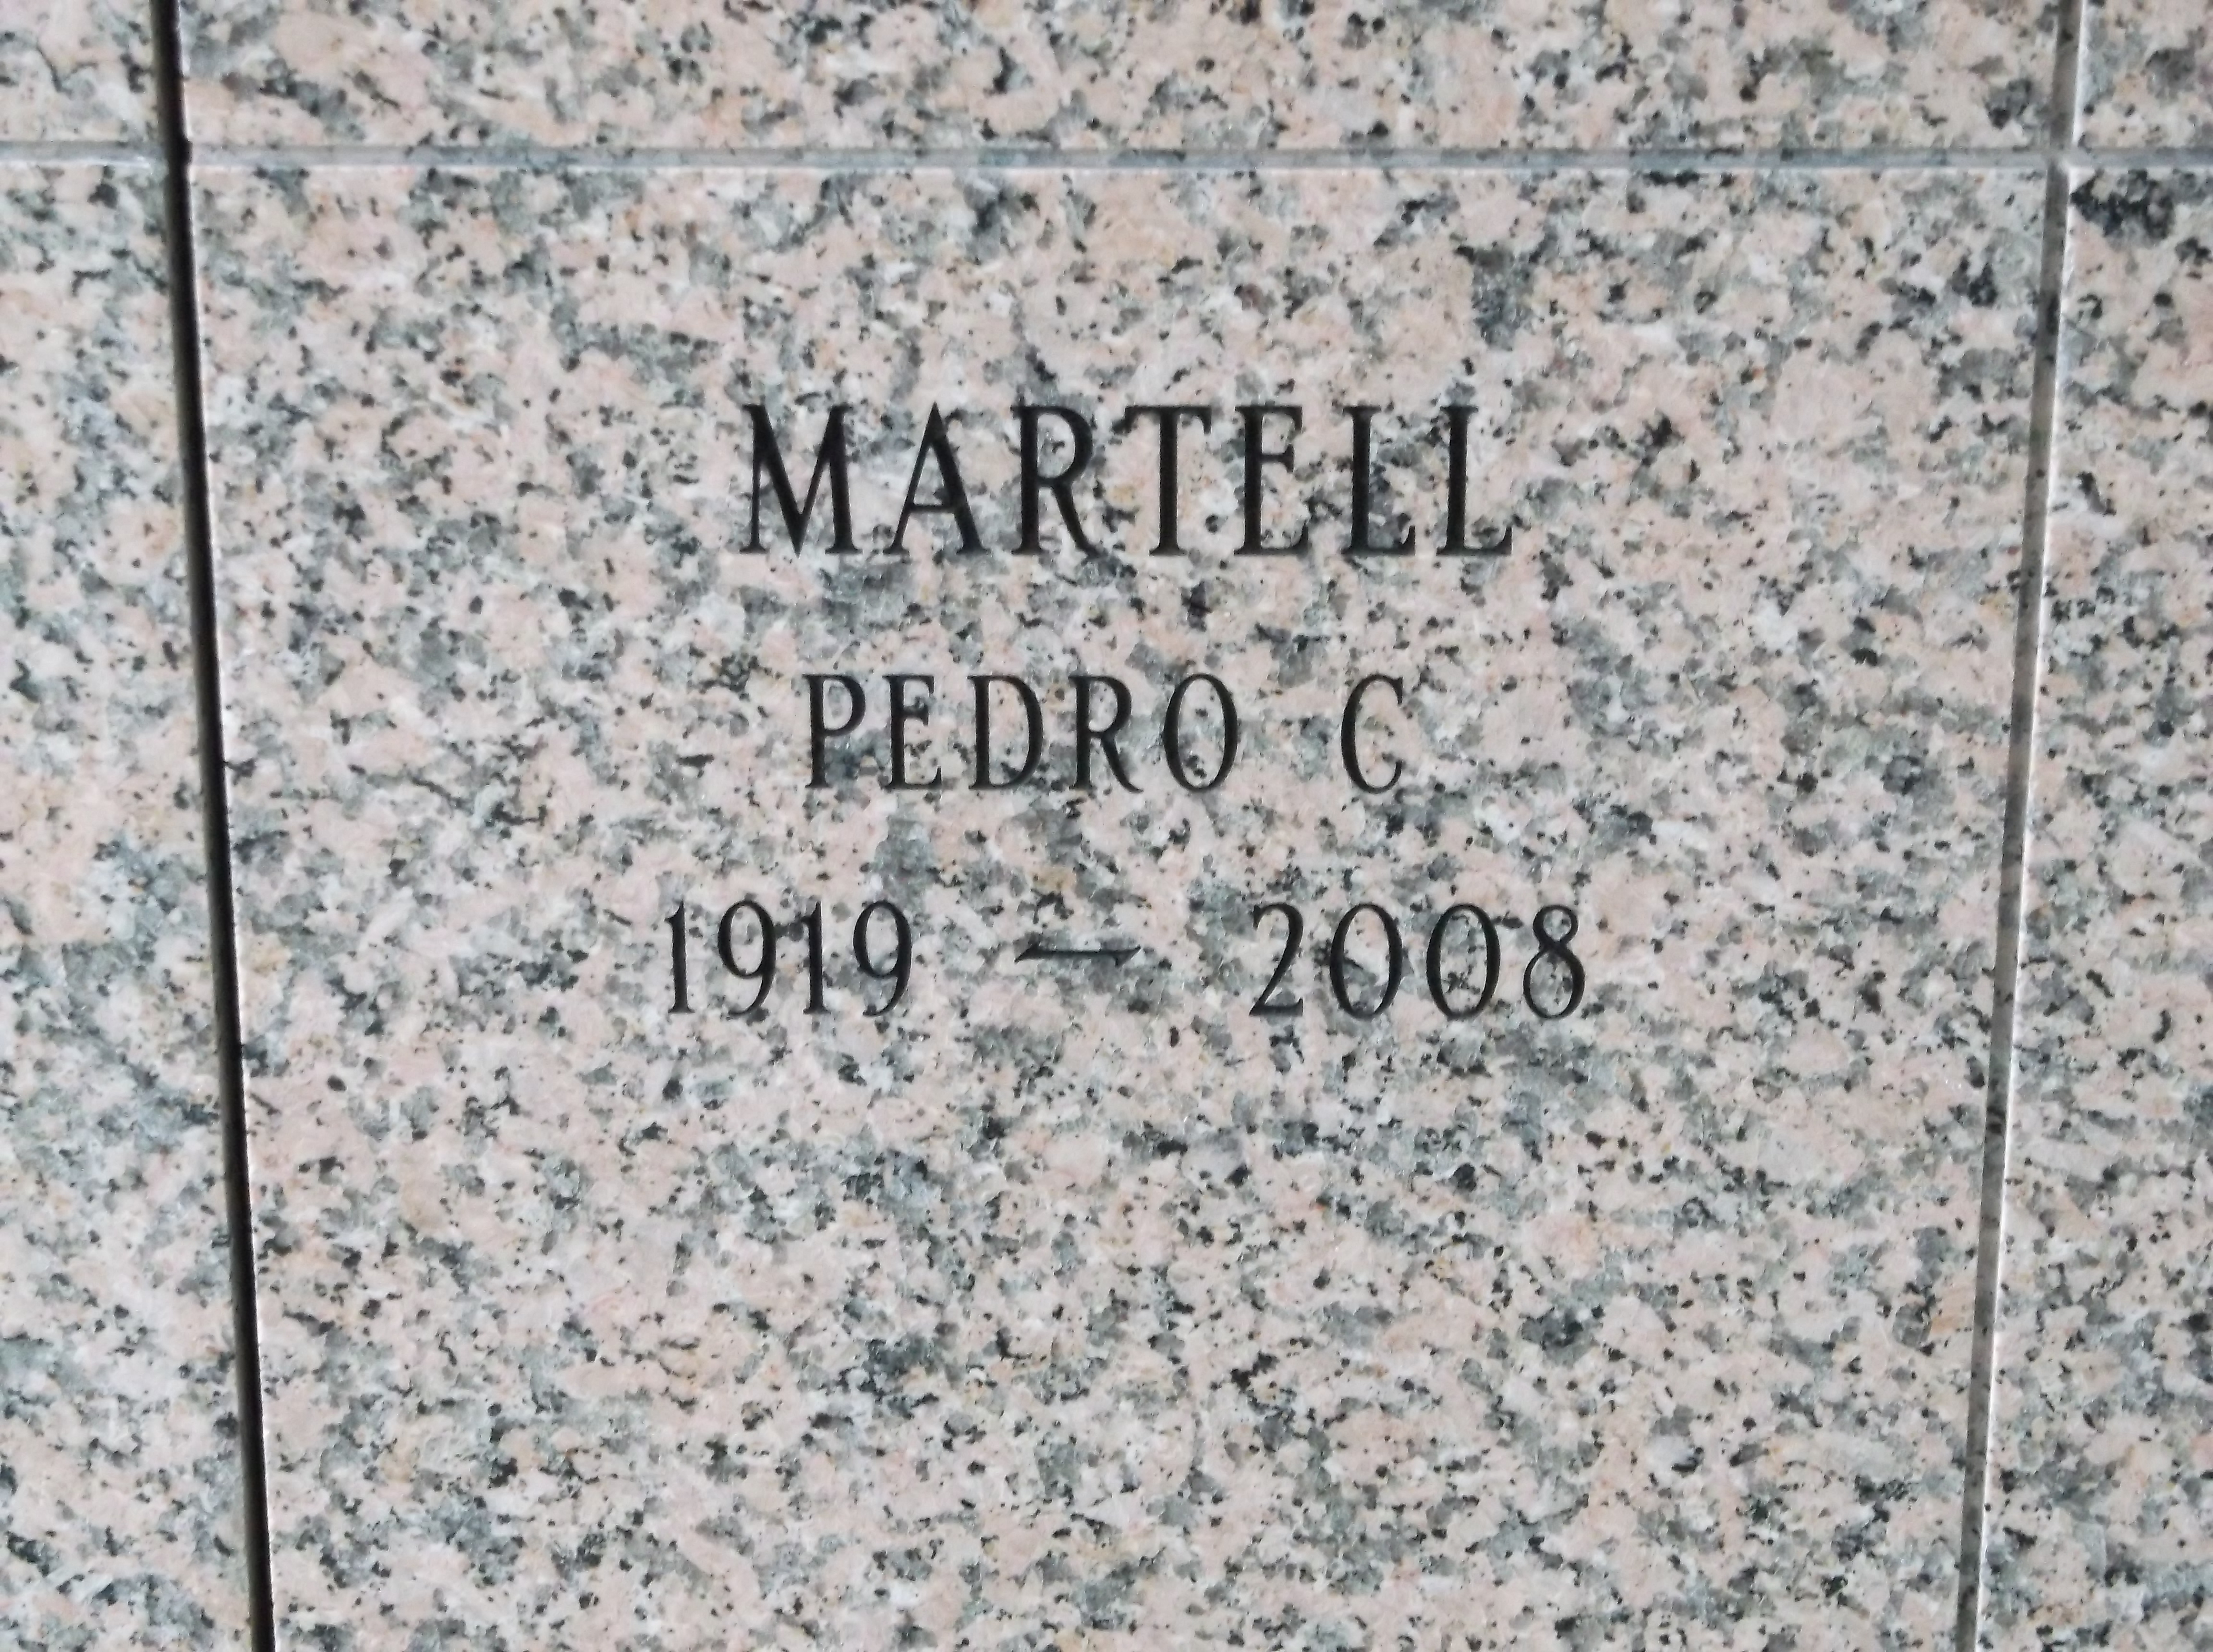 Pedro C Martell